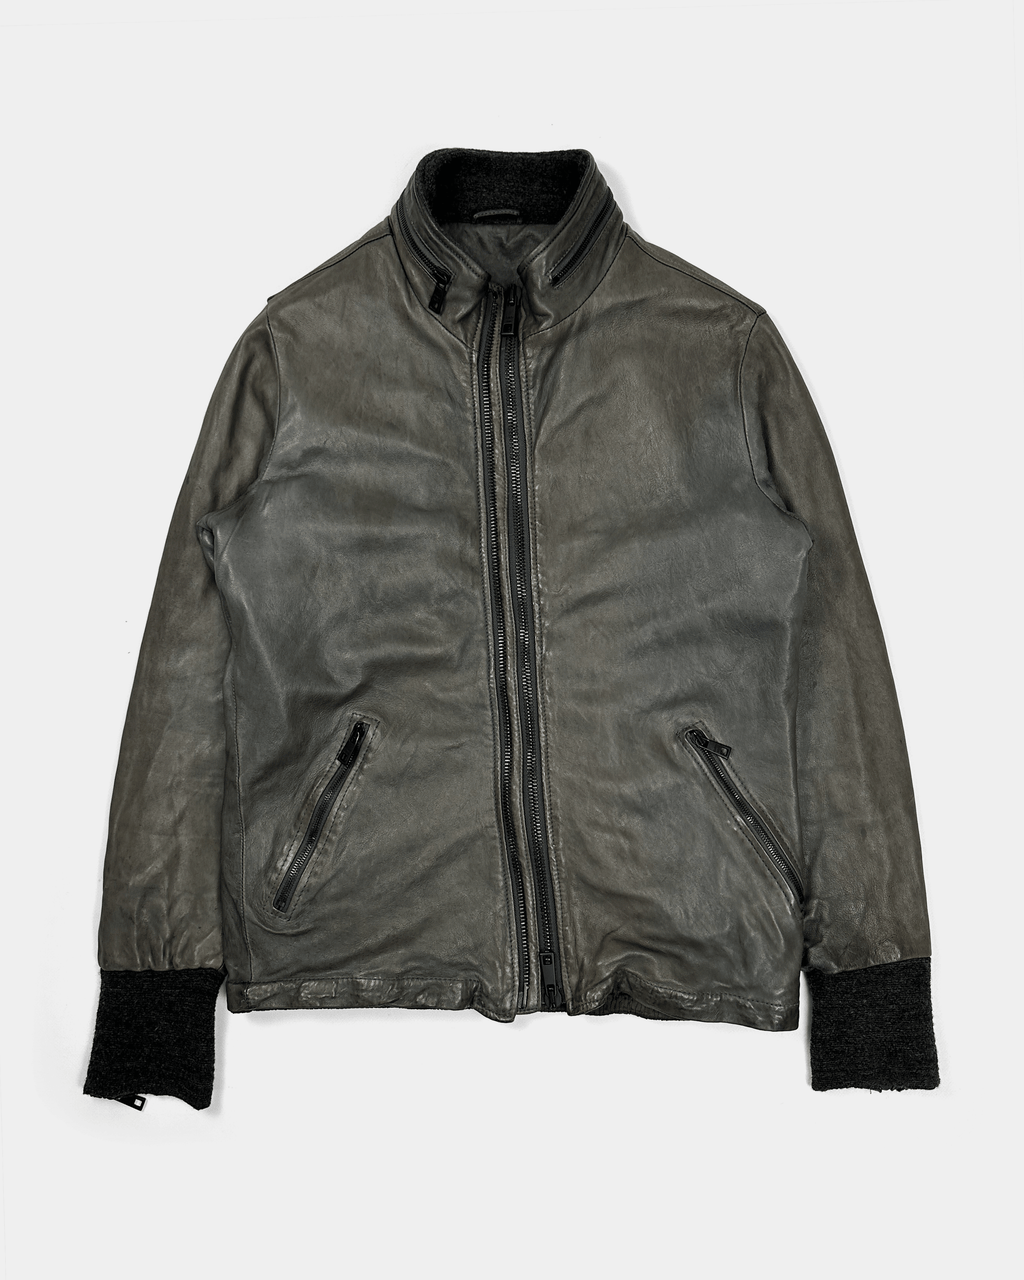 Giorgio Brato Faded Grey Leather Jacket 2000's – Vintage TTS